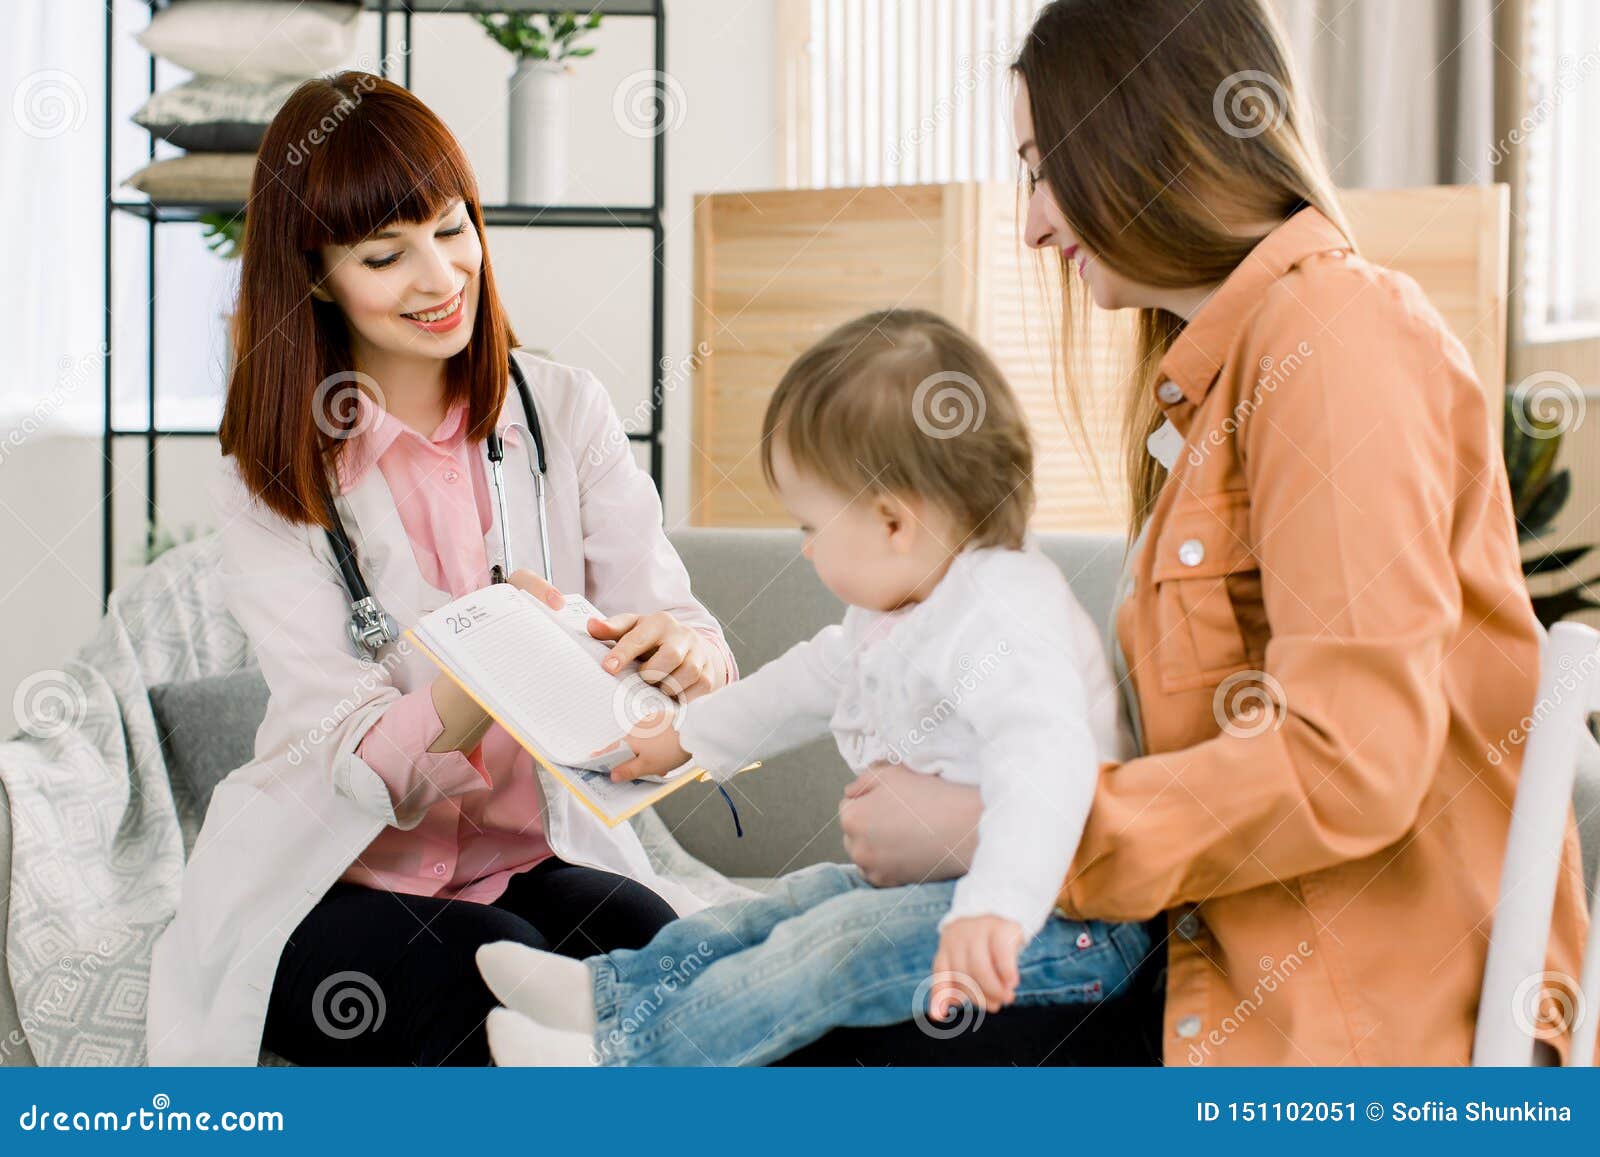 pediatrician home visit